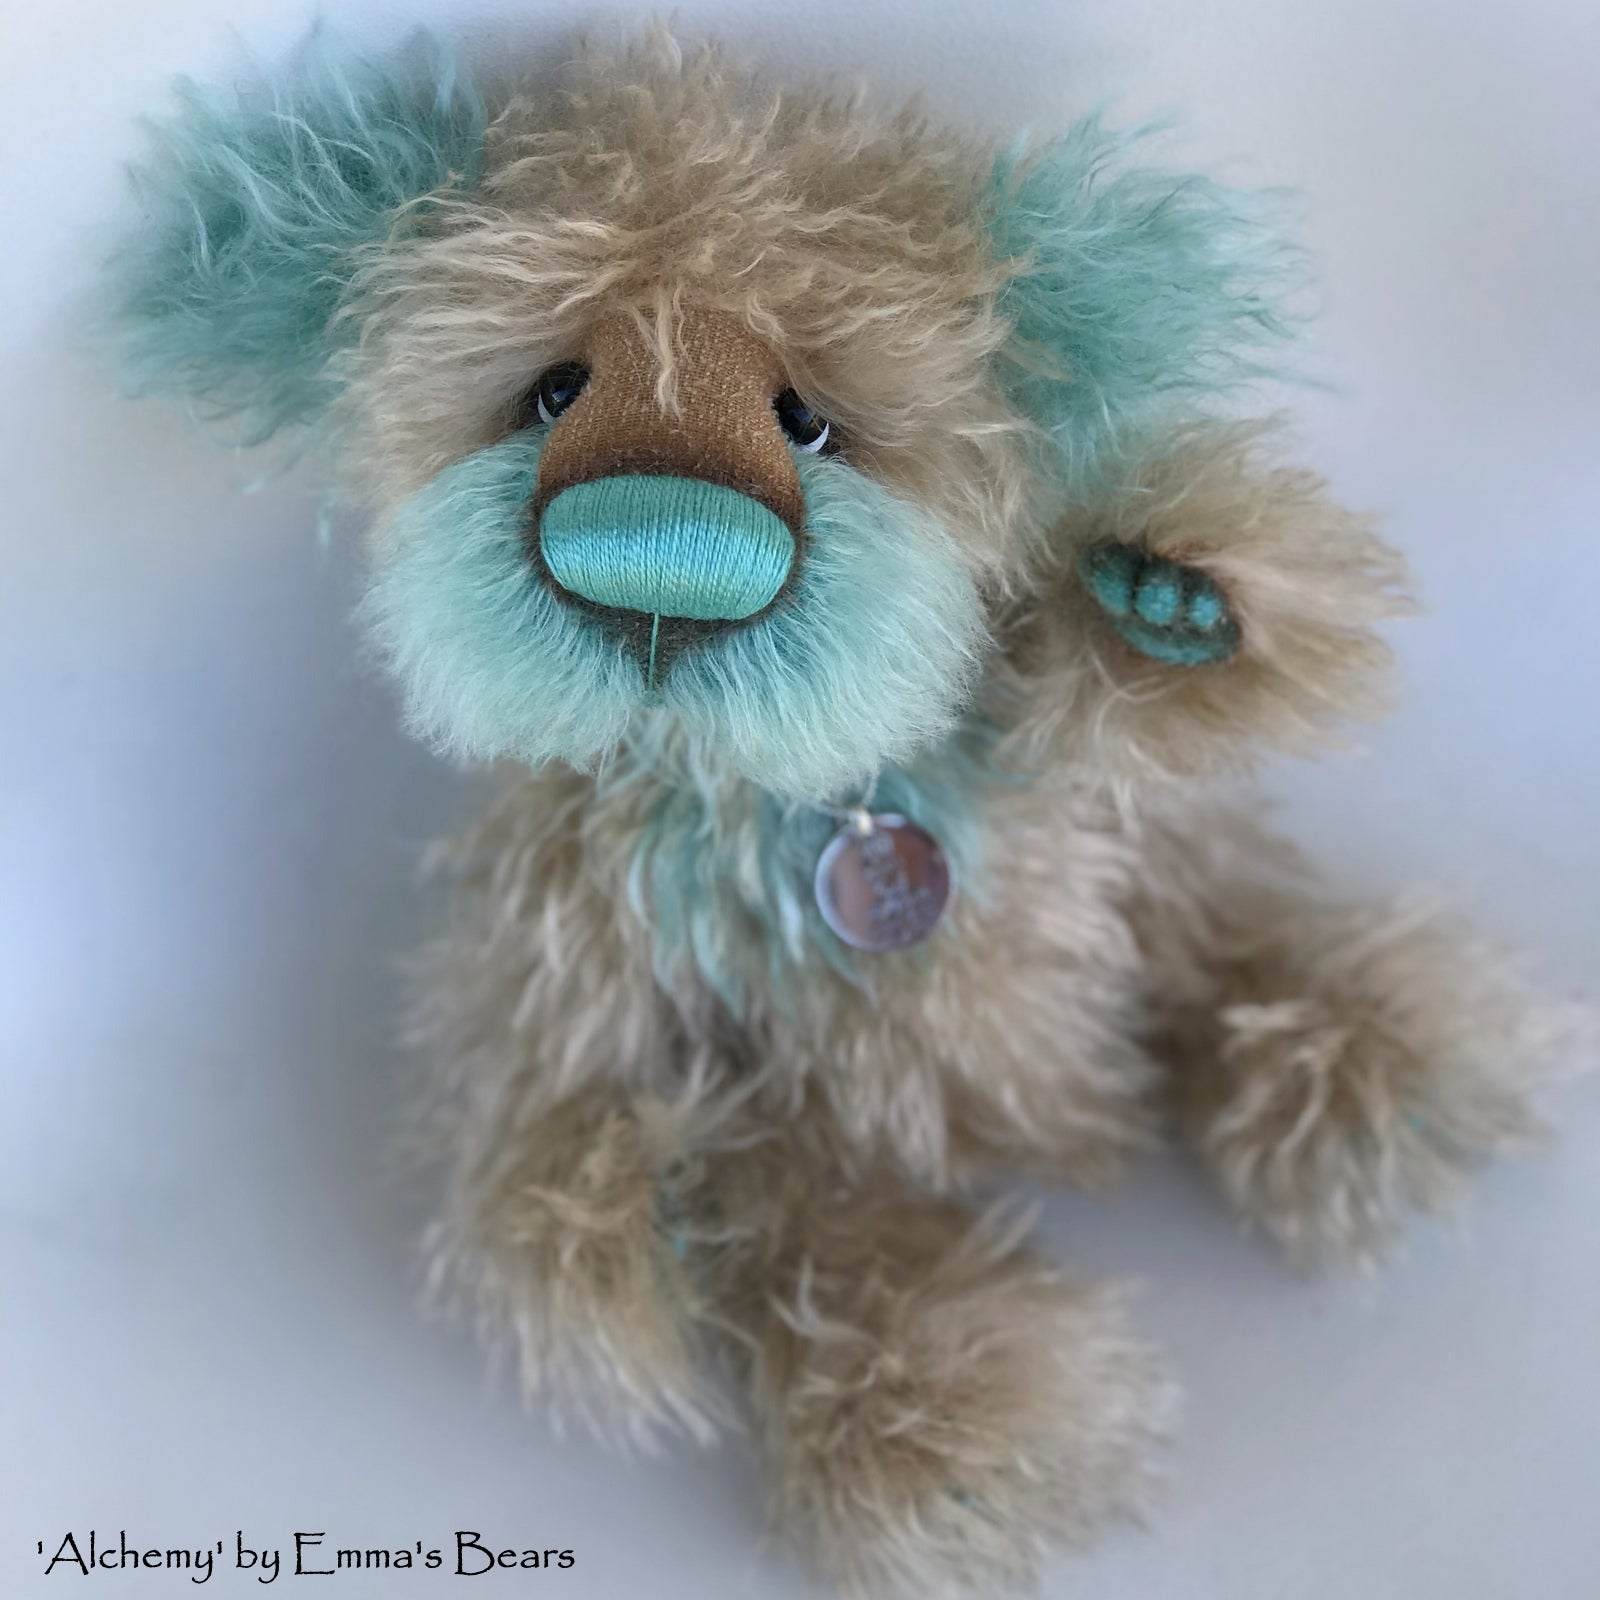 Alchemy - 20 Years of Emma's Bears Commemorative Teddy - OOAK in a series